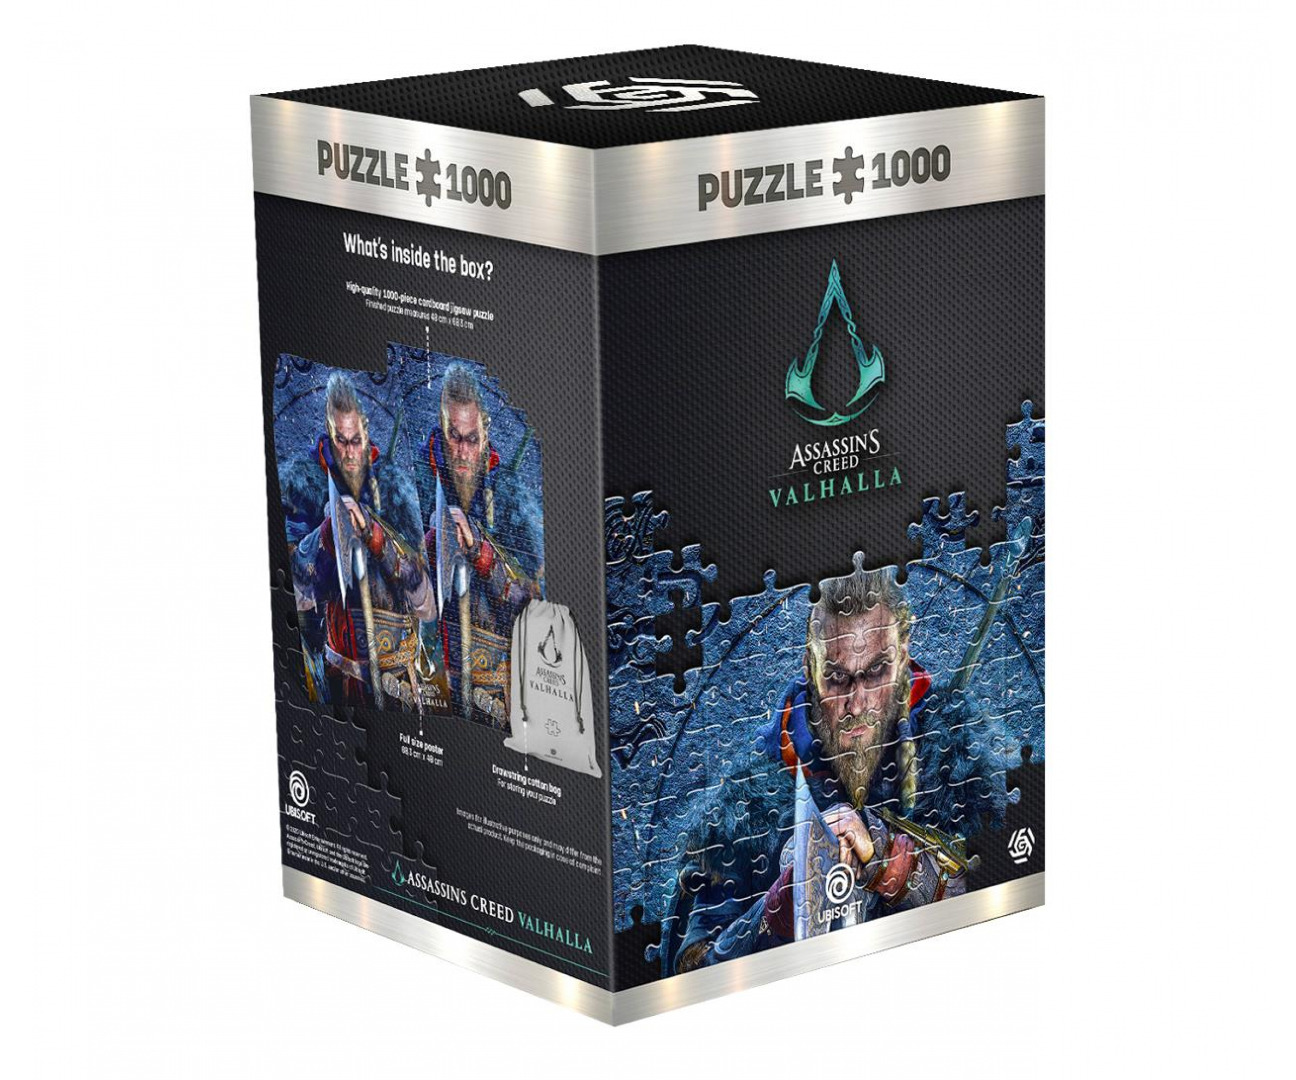 Assassins Creed Valhalla: Eivor Puzzle (1000 Pieces)